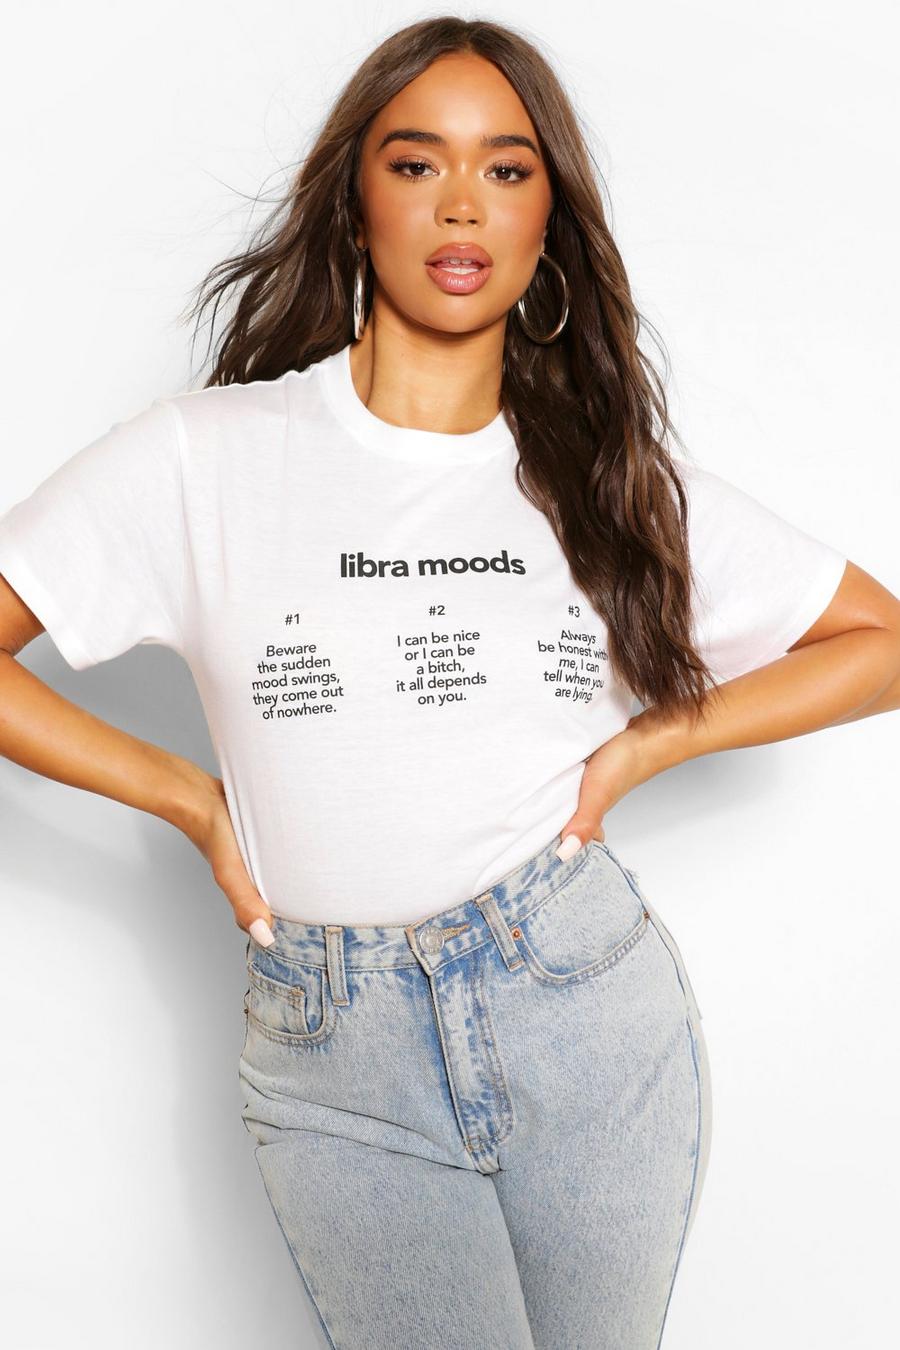 T-shirt horoscope "Libra moods", White image number 1